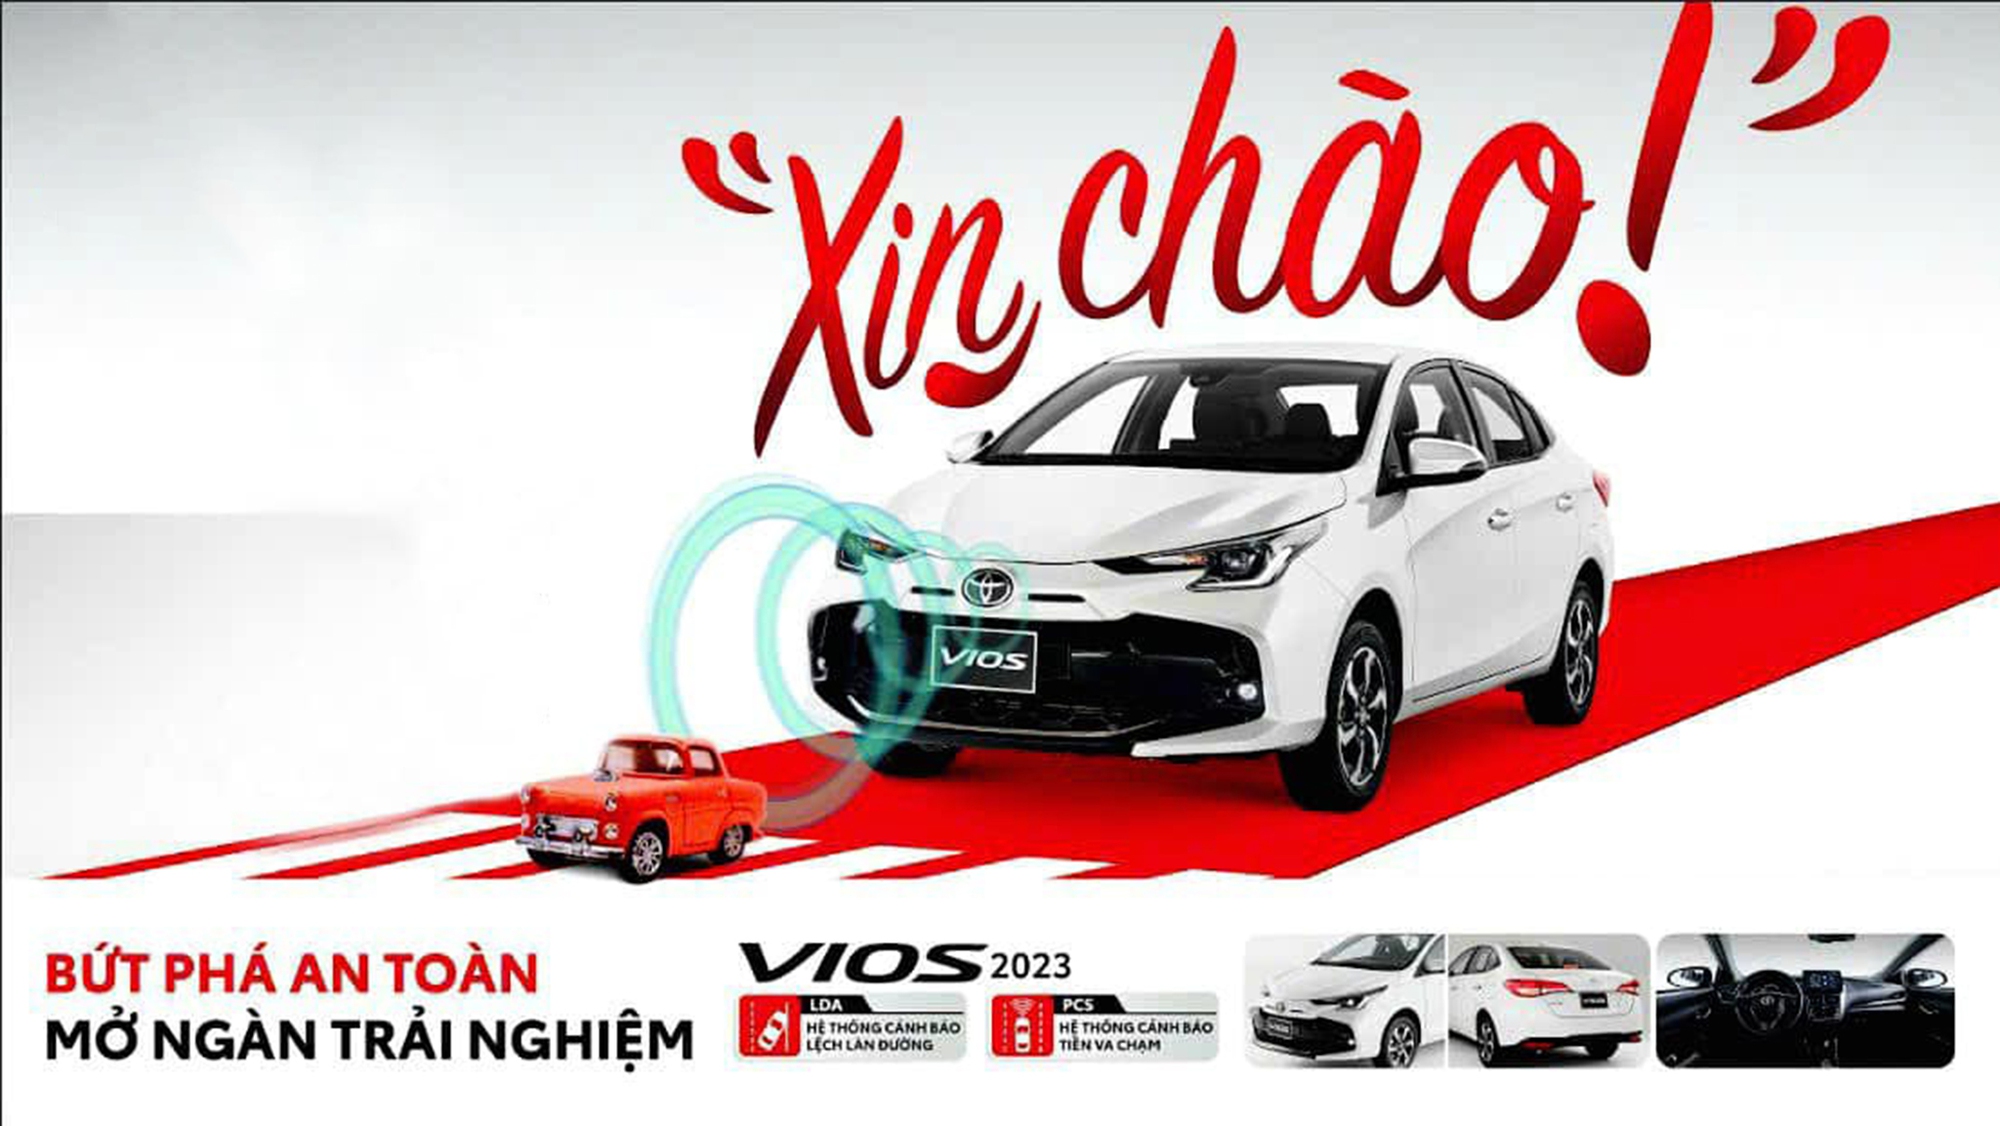 Toyota Vios 2023 Lan Dau Lo Anh Chinh Thuc Tai Viet Nam